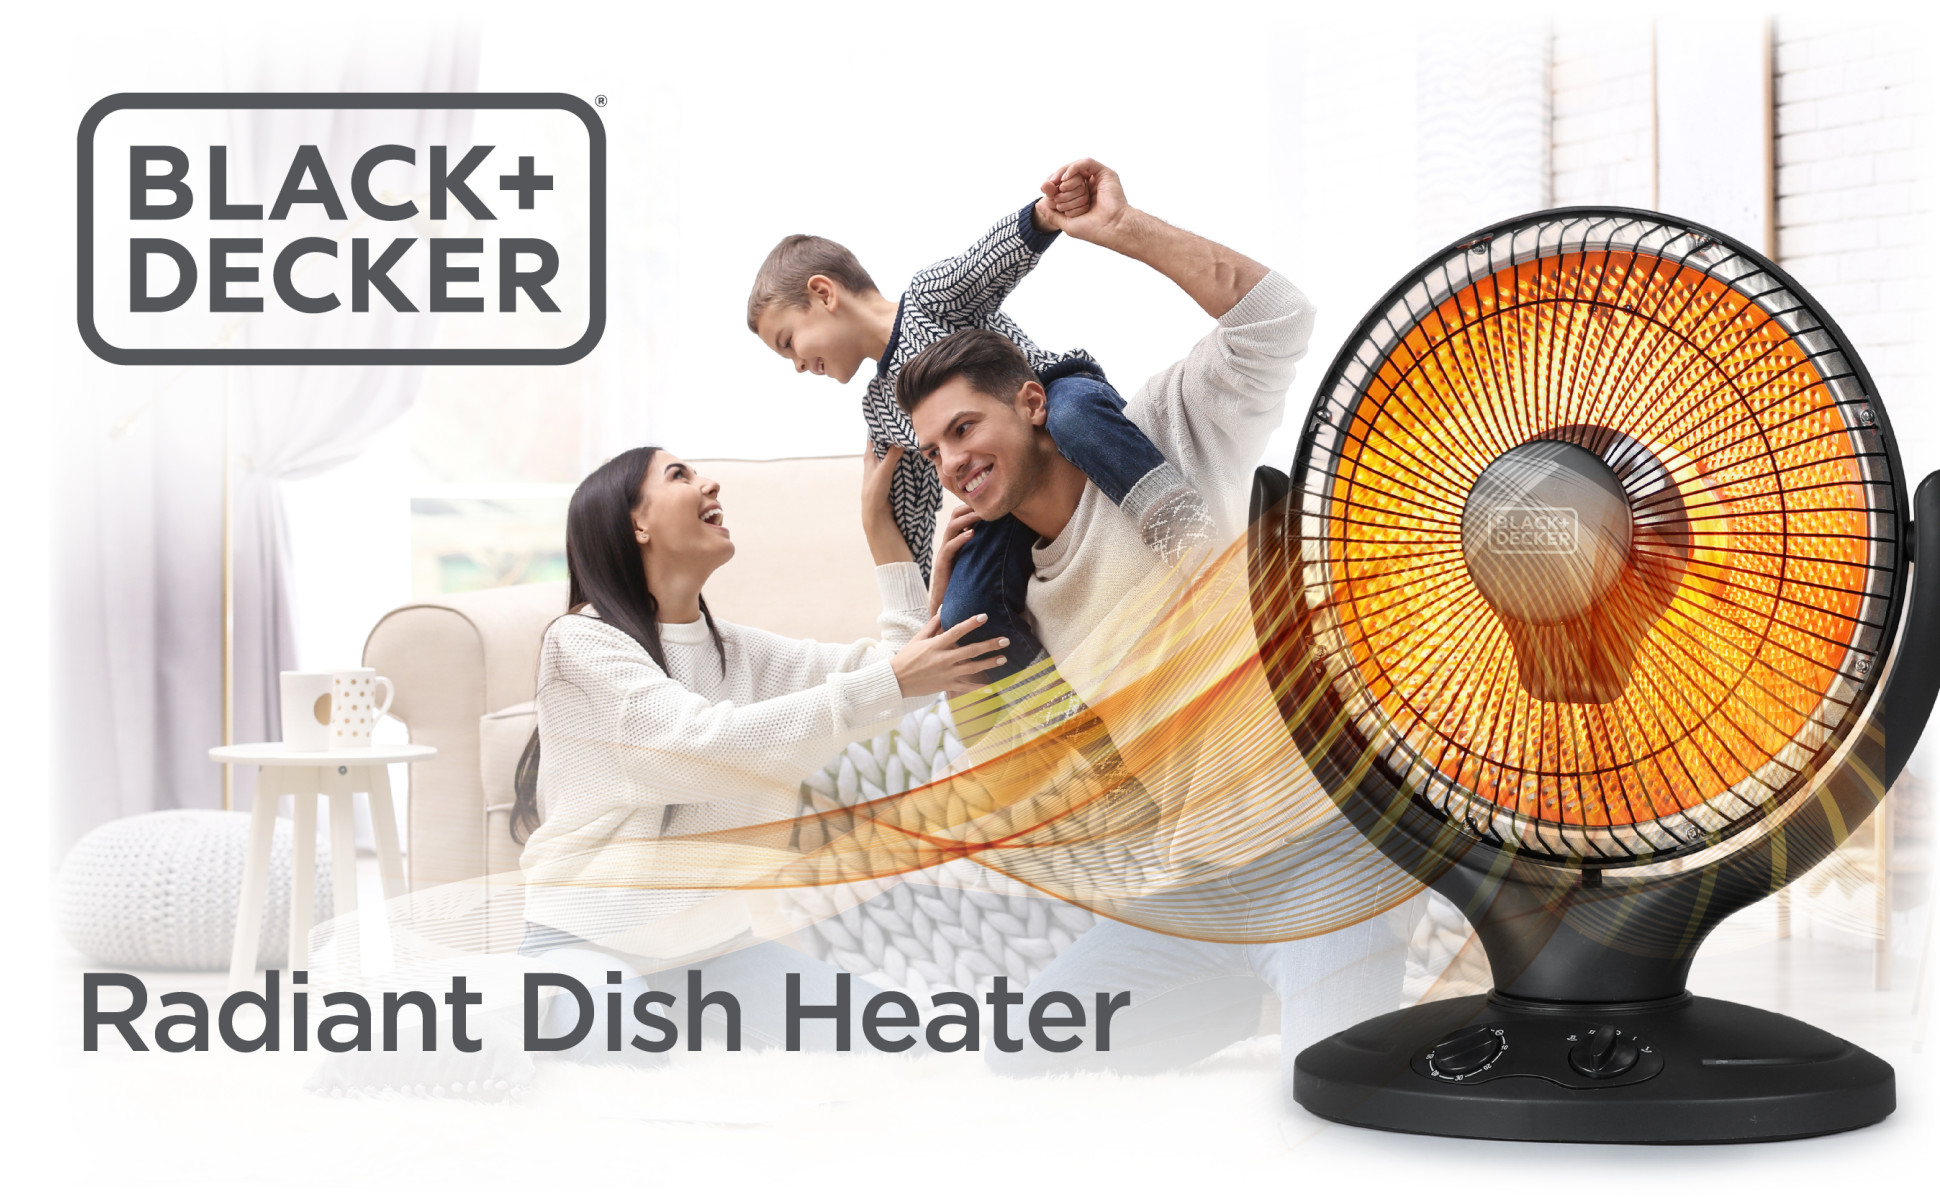 Black+decker Bhro608 Radiant Dish Heater - 14in